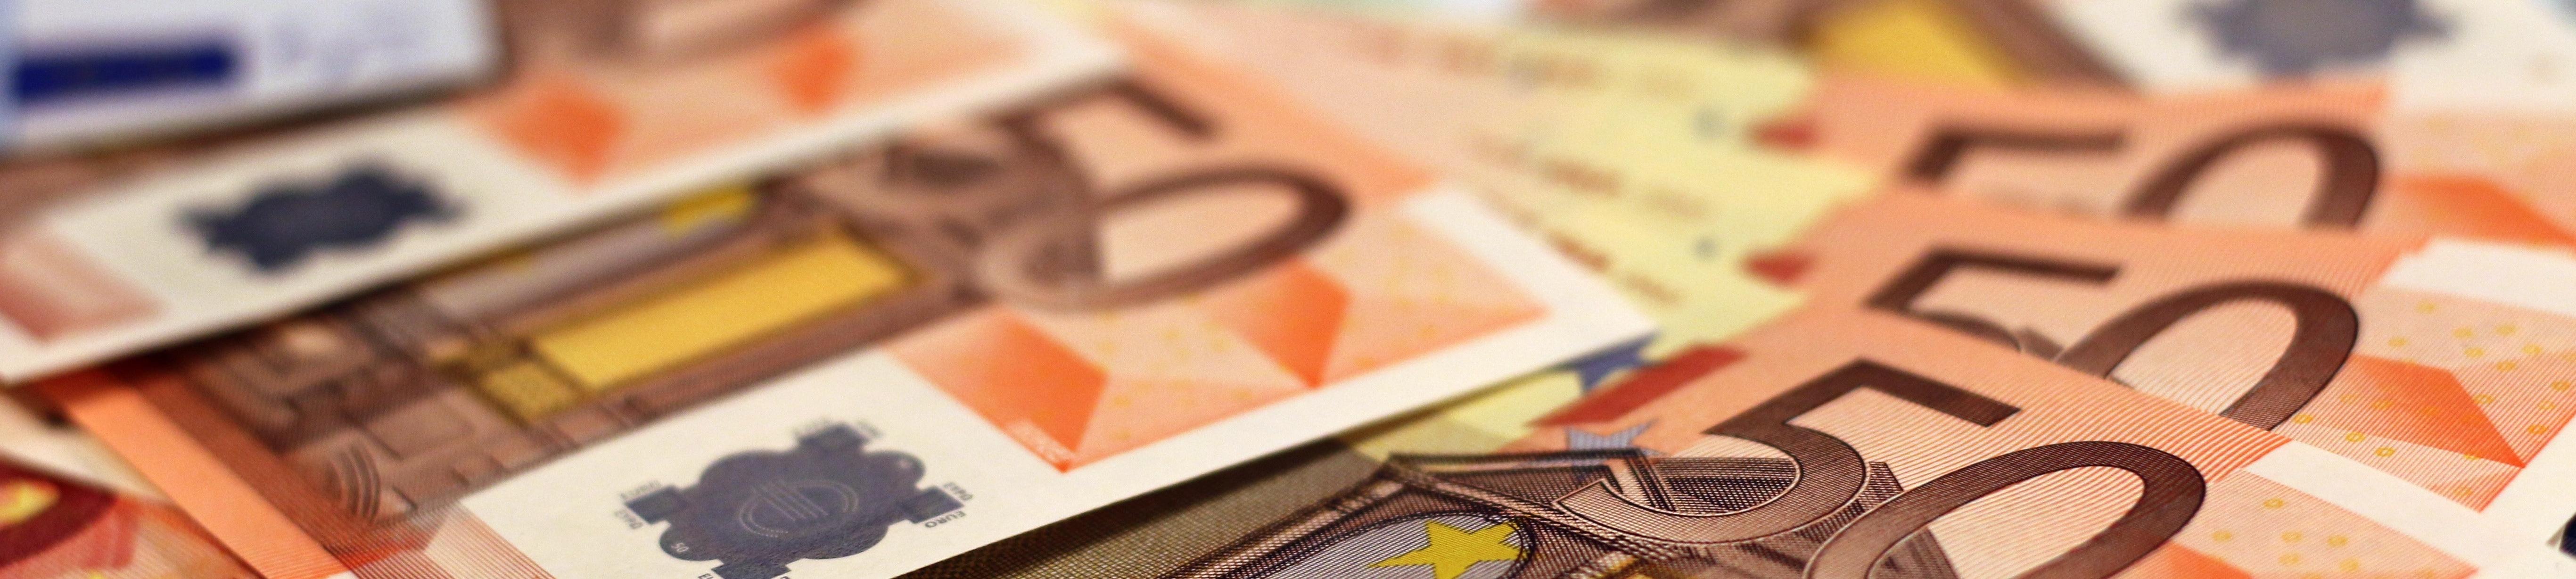 euro bills